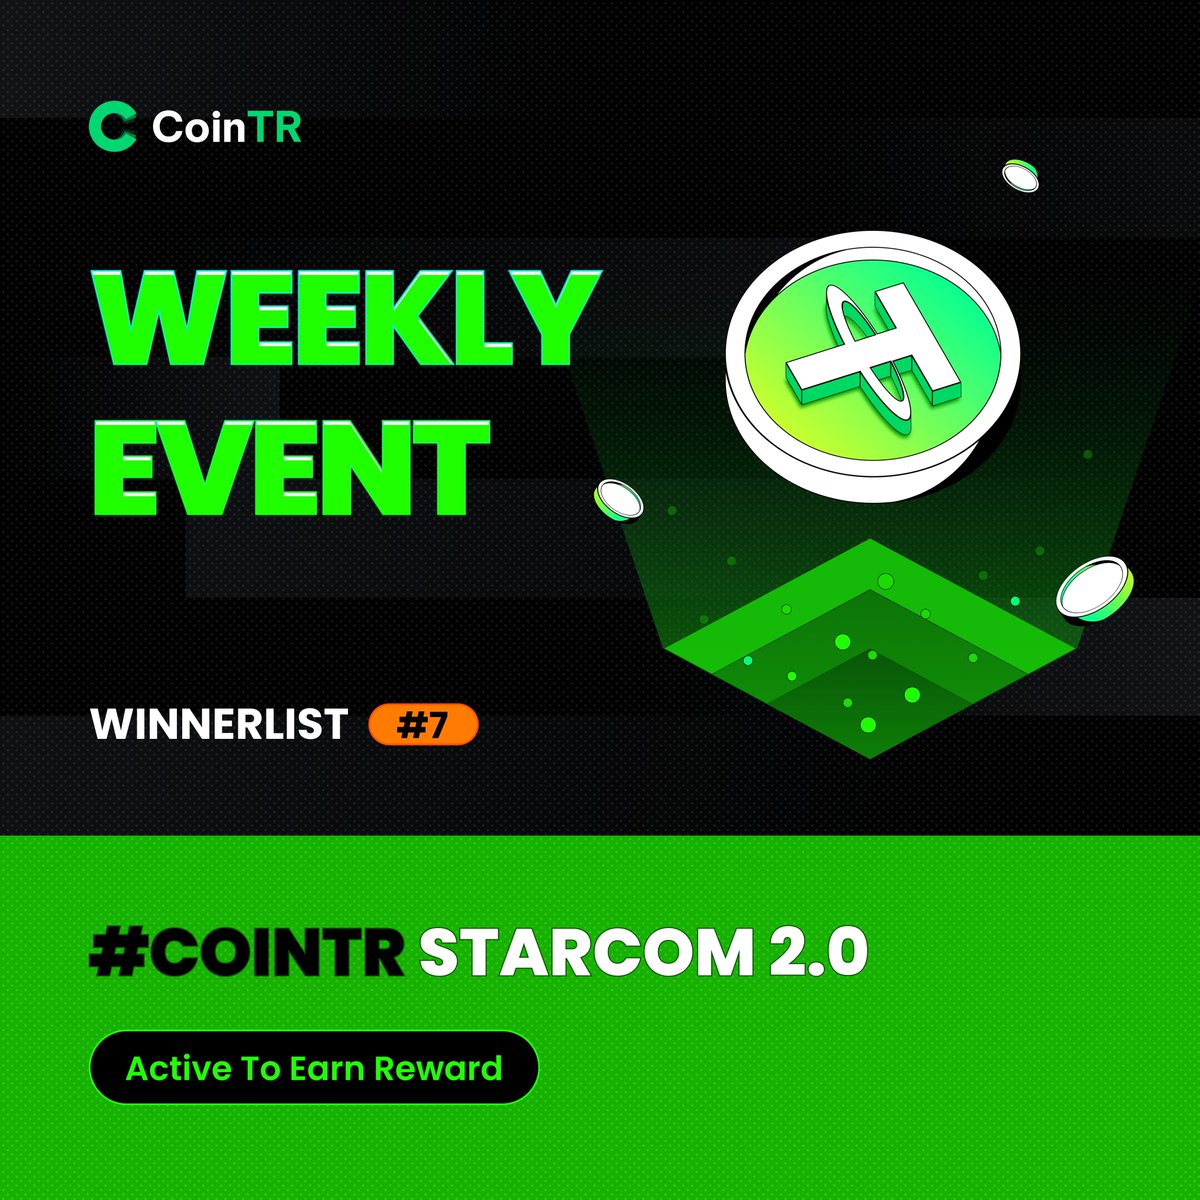 🎉🎉 #CoinTR StarCom 2.0 Round #7 Winners ↙️

[TG]
@robin43103 - $37.57
@habib9966 - $26.91
@mafaruk900 - $14.80
@soheltaz_2 - $11.11
@rezaul_132 - $9.58

🎁 Claim reward - DM @CoinTR01

Thank you 🙏🏻
#CoinTR_Event #StarCom #CommunityEvent